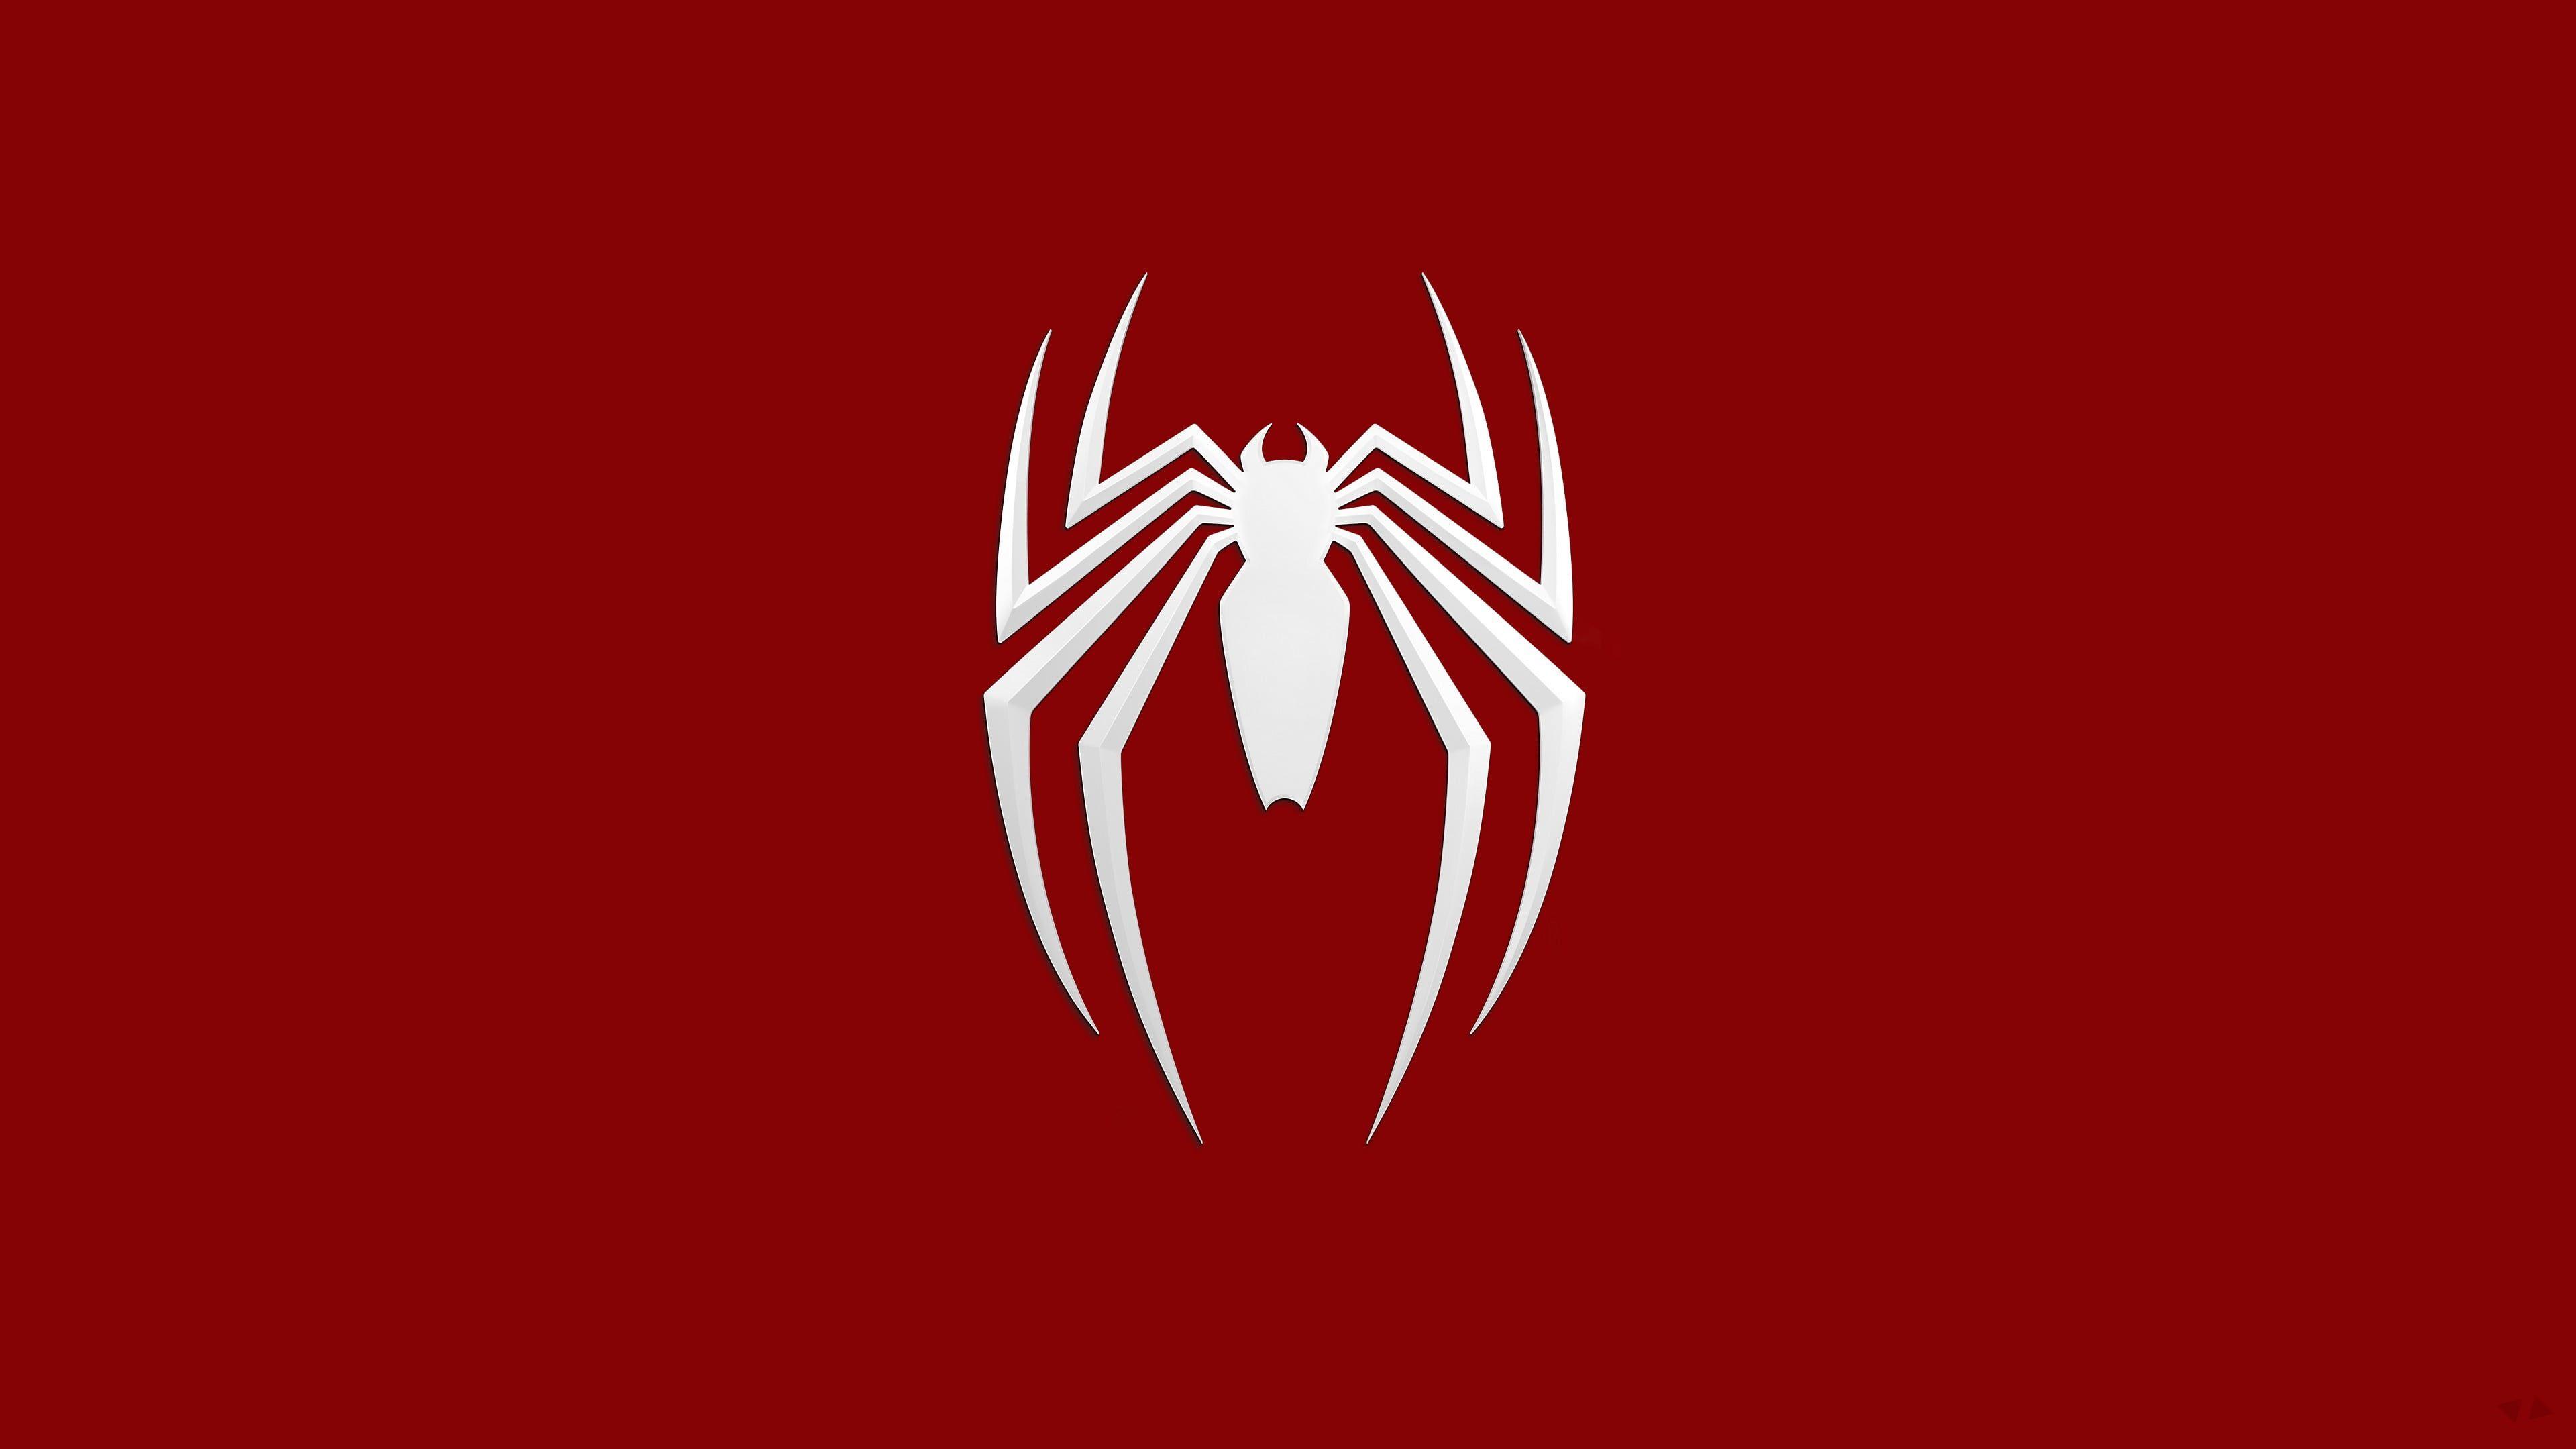 Spider Man Logo 4k Wallpapers Top Free Spider Man Logo 4k Backgrounds 